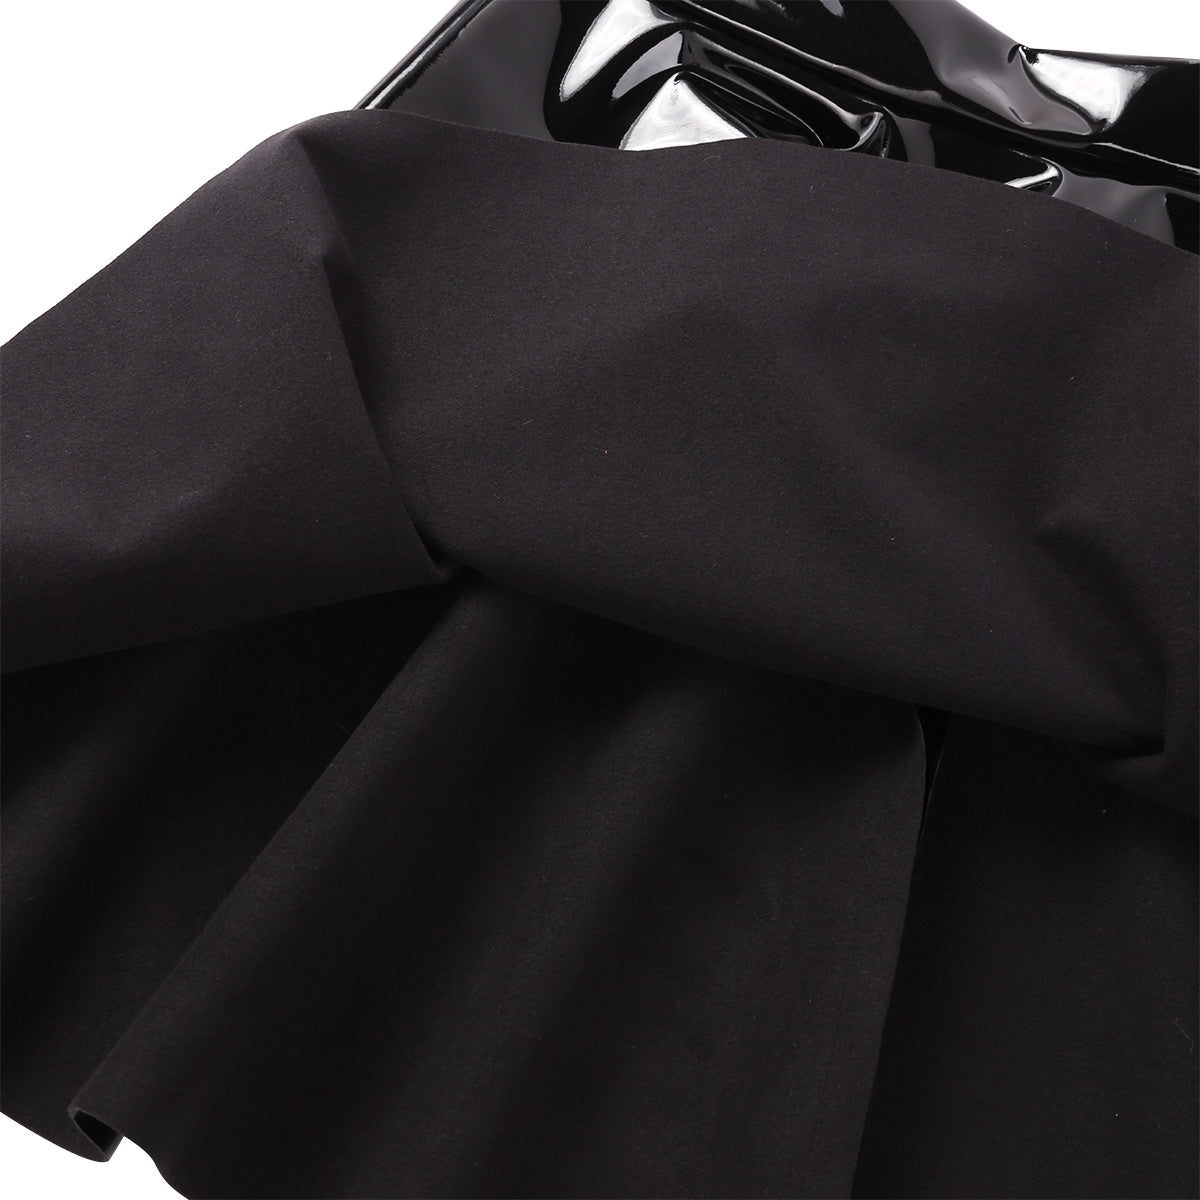 Rags n Rituals 'Hex' Black PU mini skirt at $29.99 USD